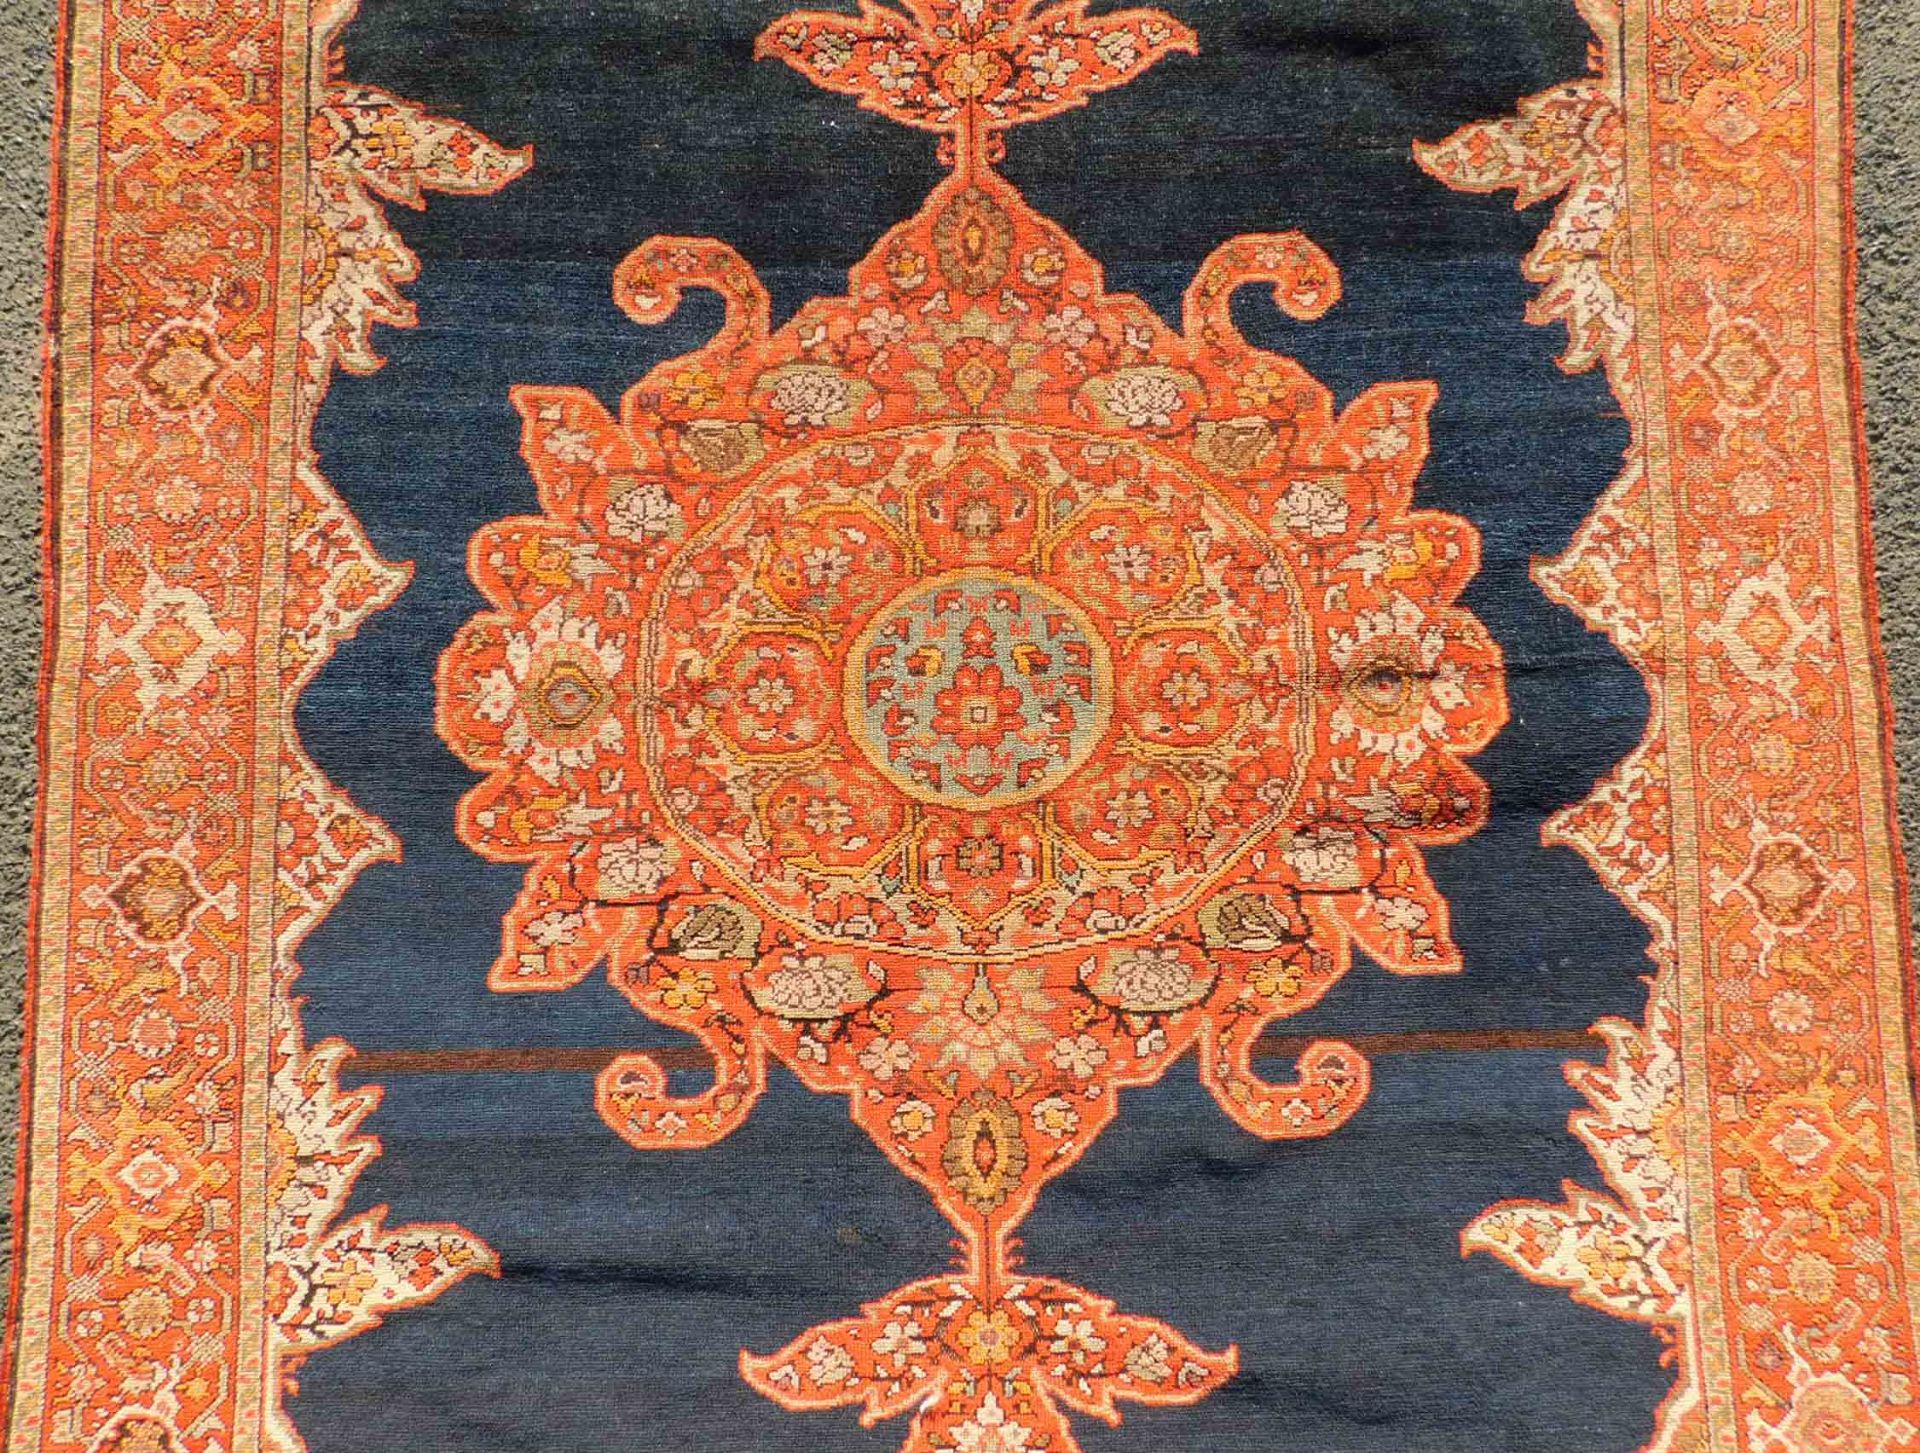 Malayer Persian carpet. Iran. Antique, around 120-150 years old. - Image 3 of 6